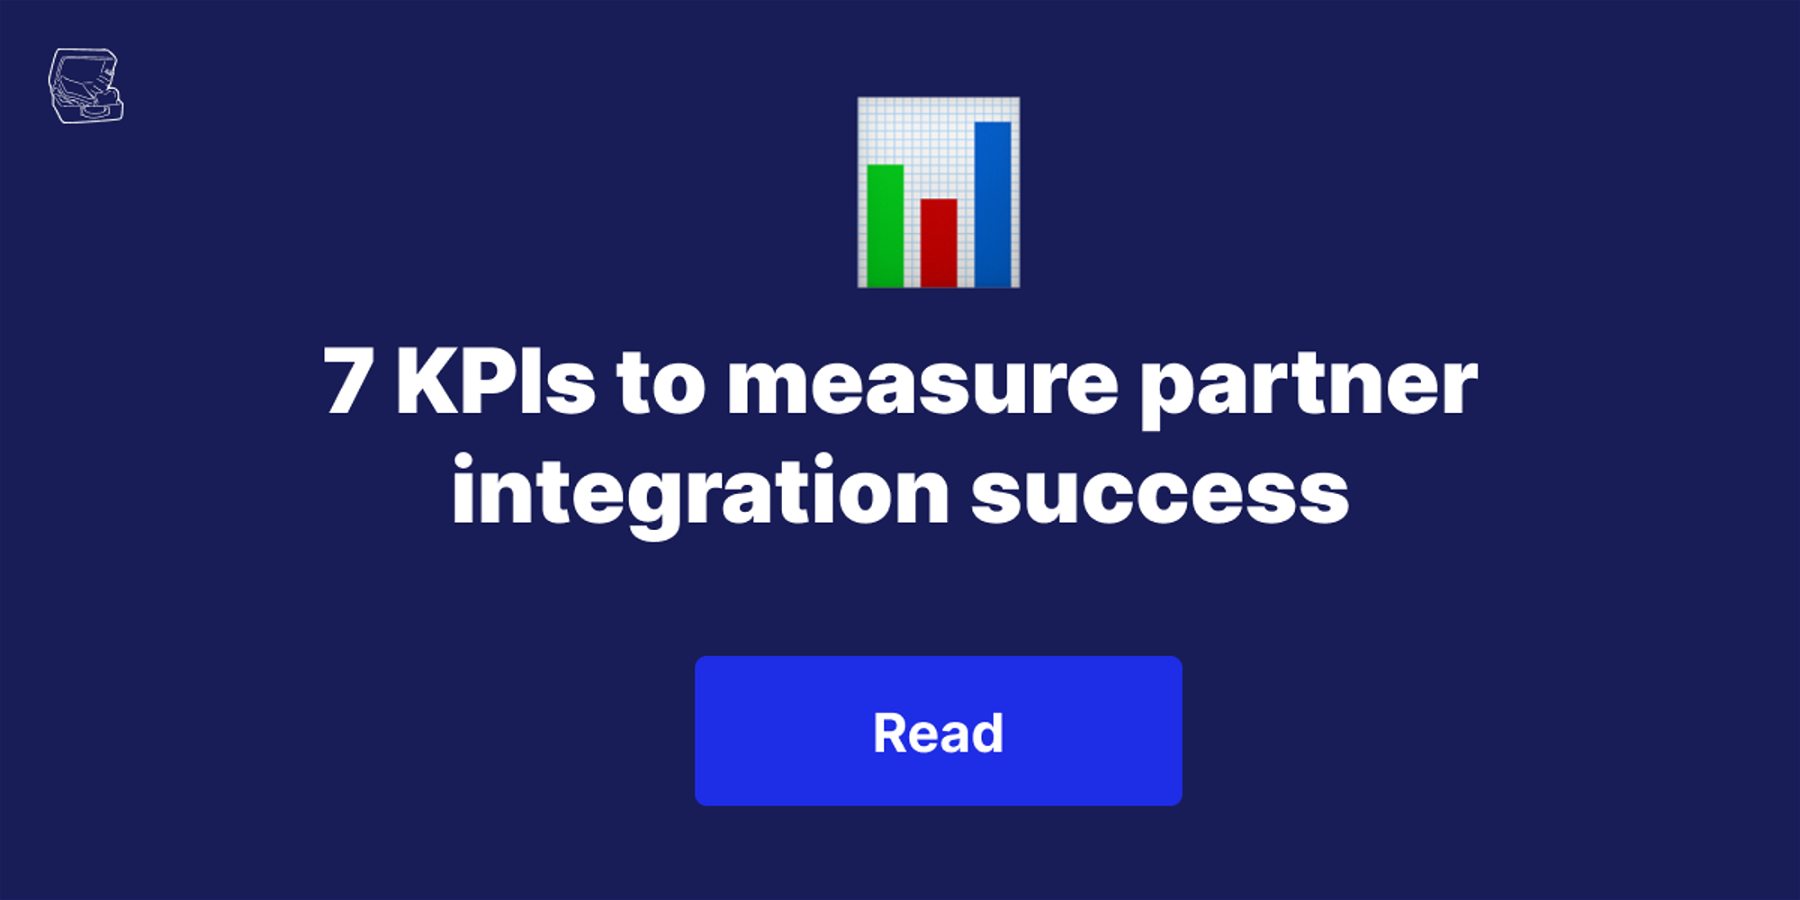 7 KPIs to measure partner integration success